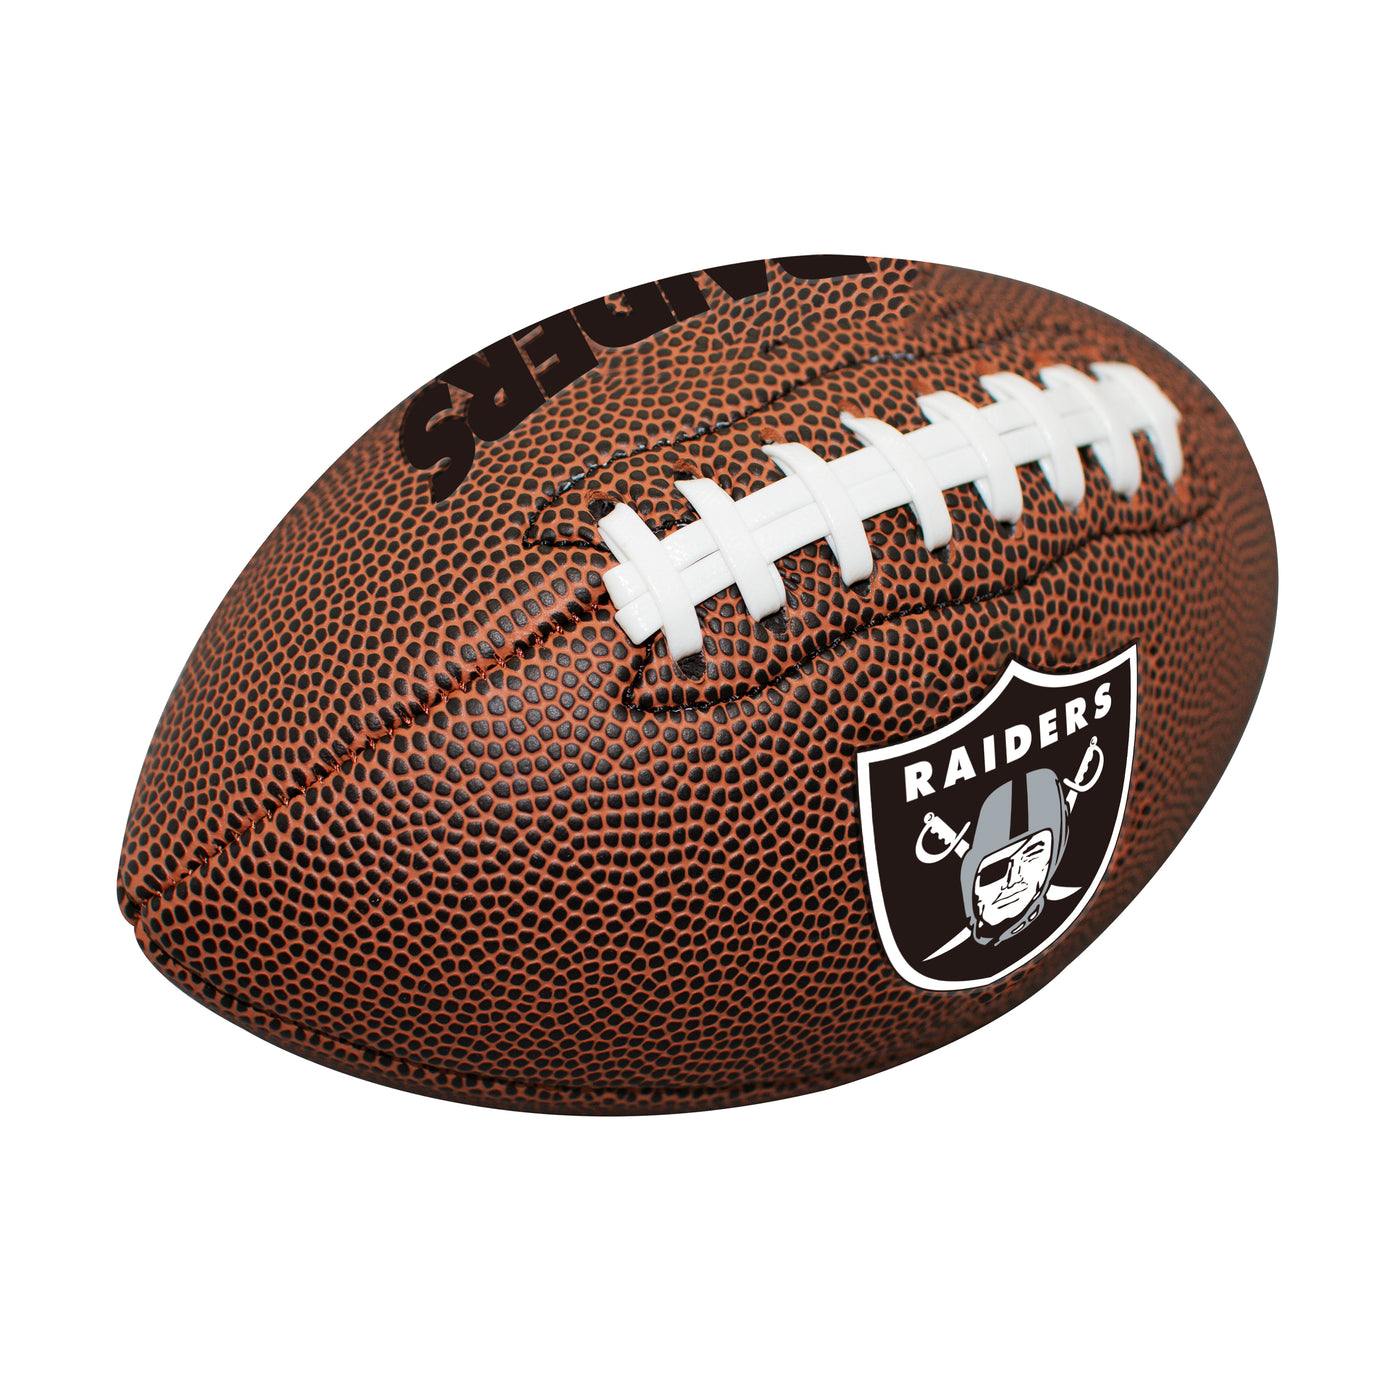 Las Vegas Raiders Mini Size Composite Football